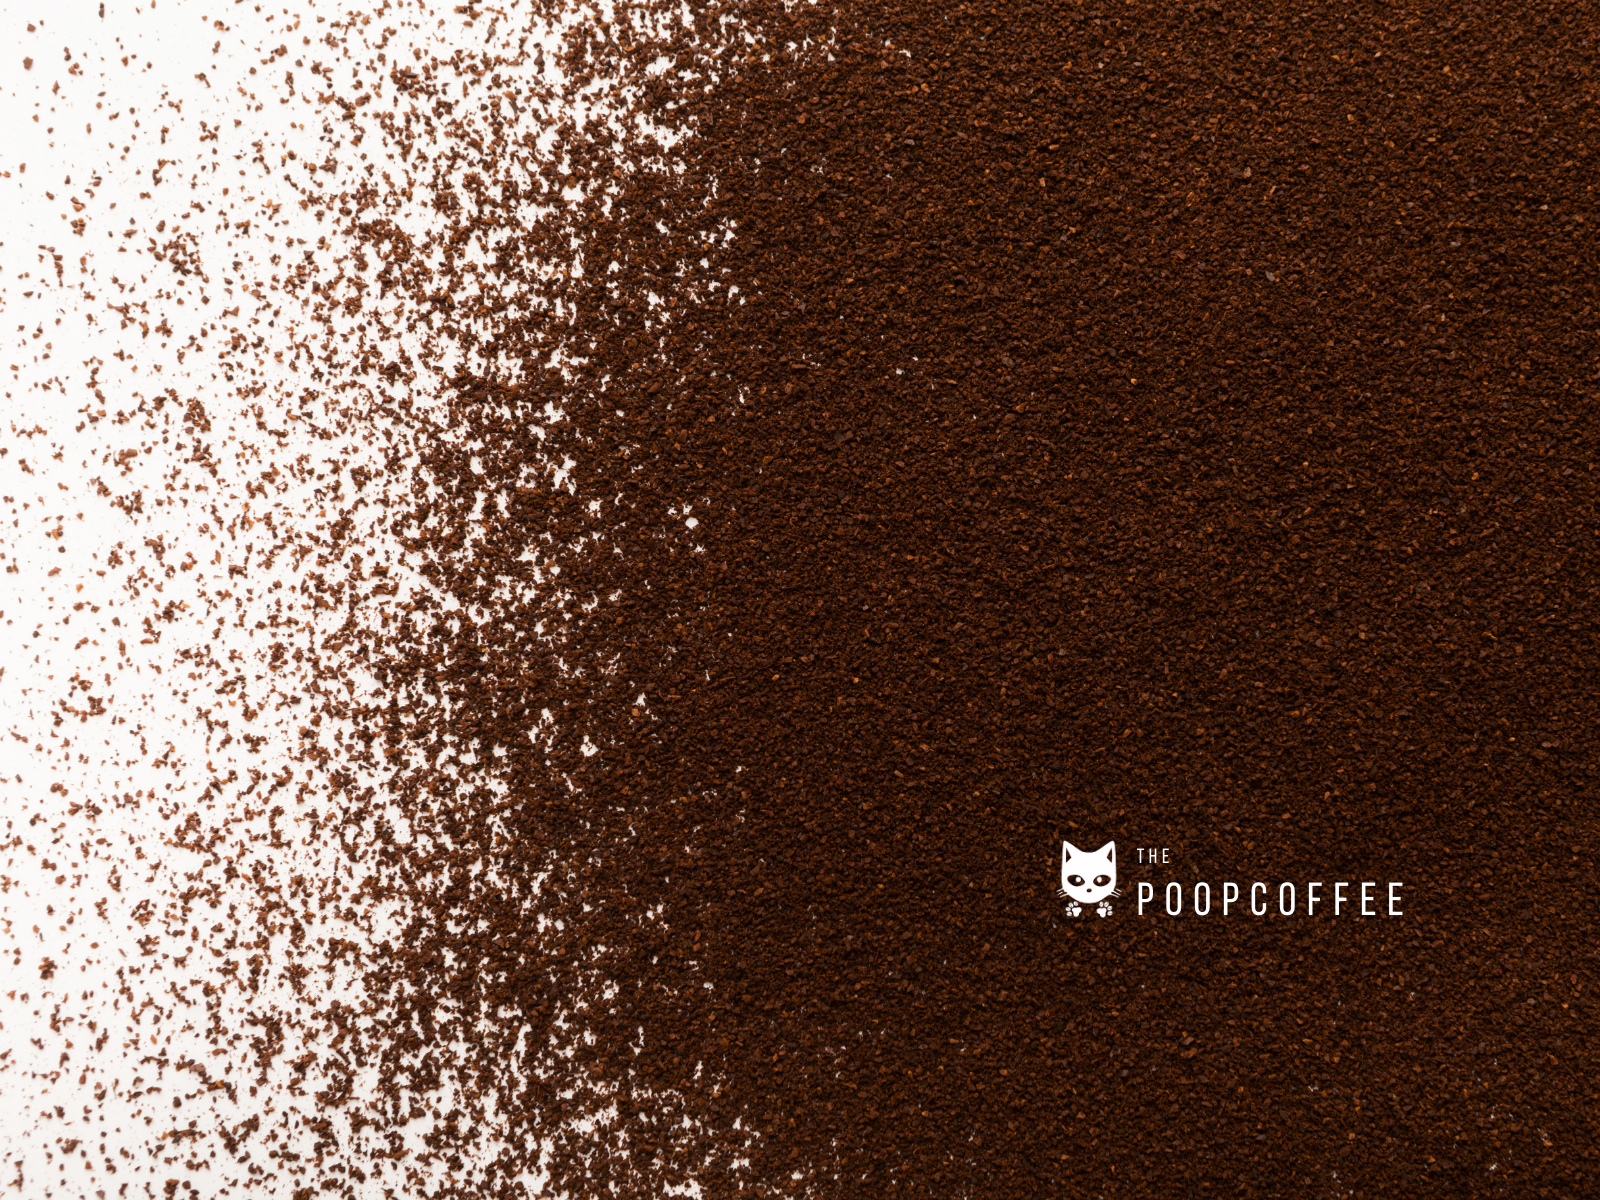 Thepoopcoffee - Ground Coffee - Kopi Luwak